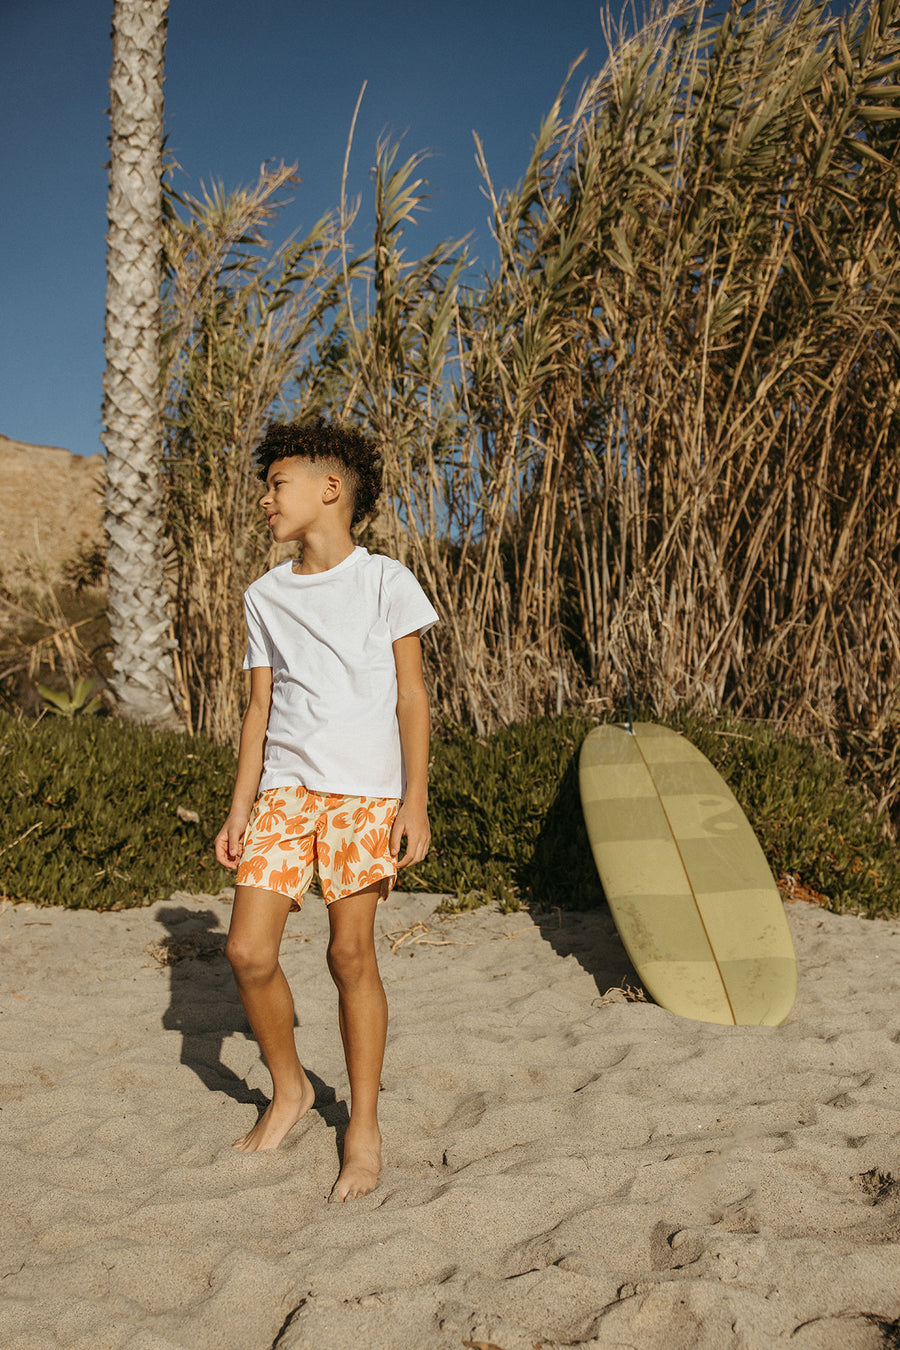 Seaesta Surf x Ty Williams / Almond / Boardshorts